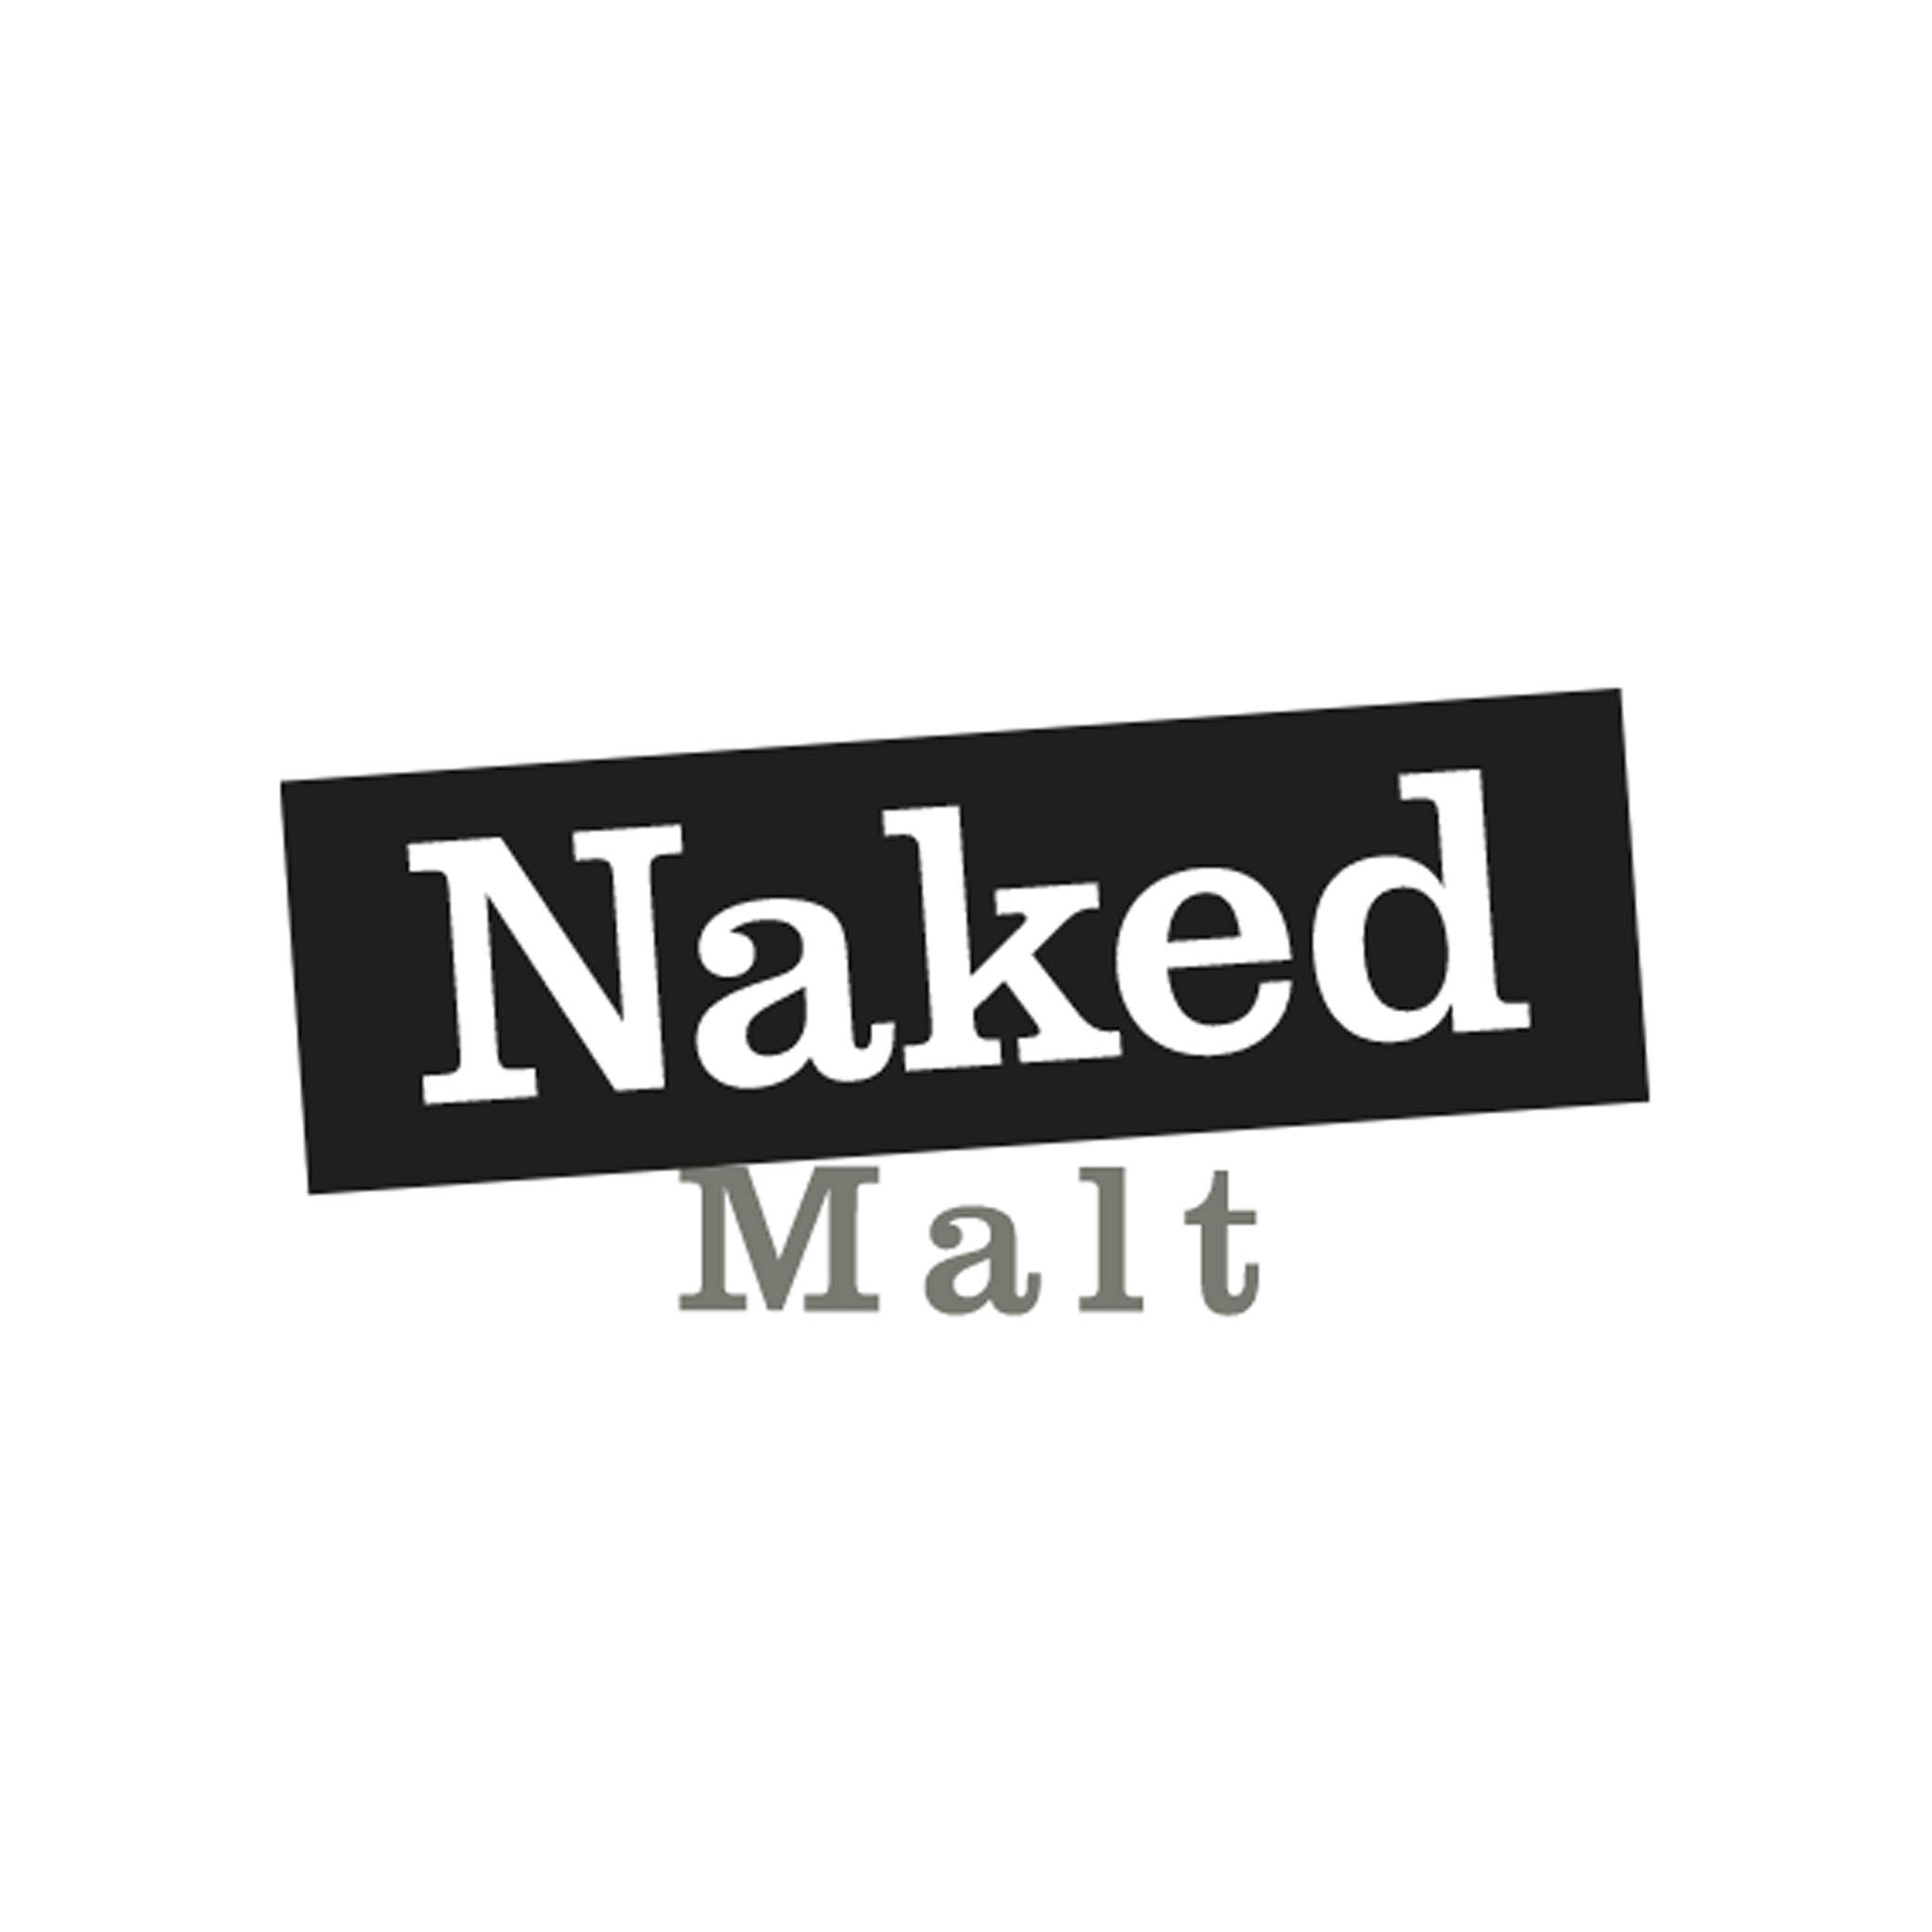 Pancaniaga Indoperkasa - Naked Malt